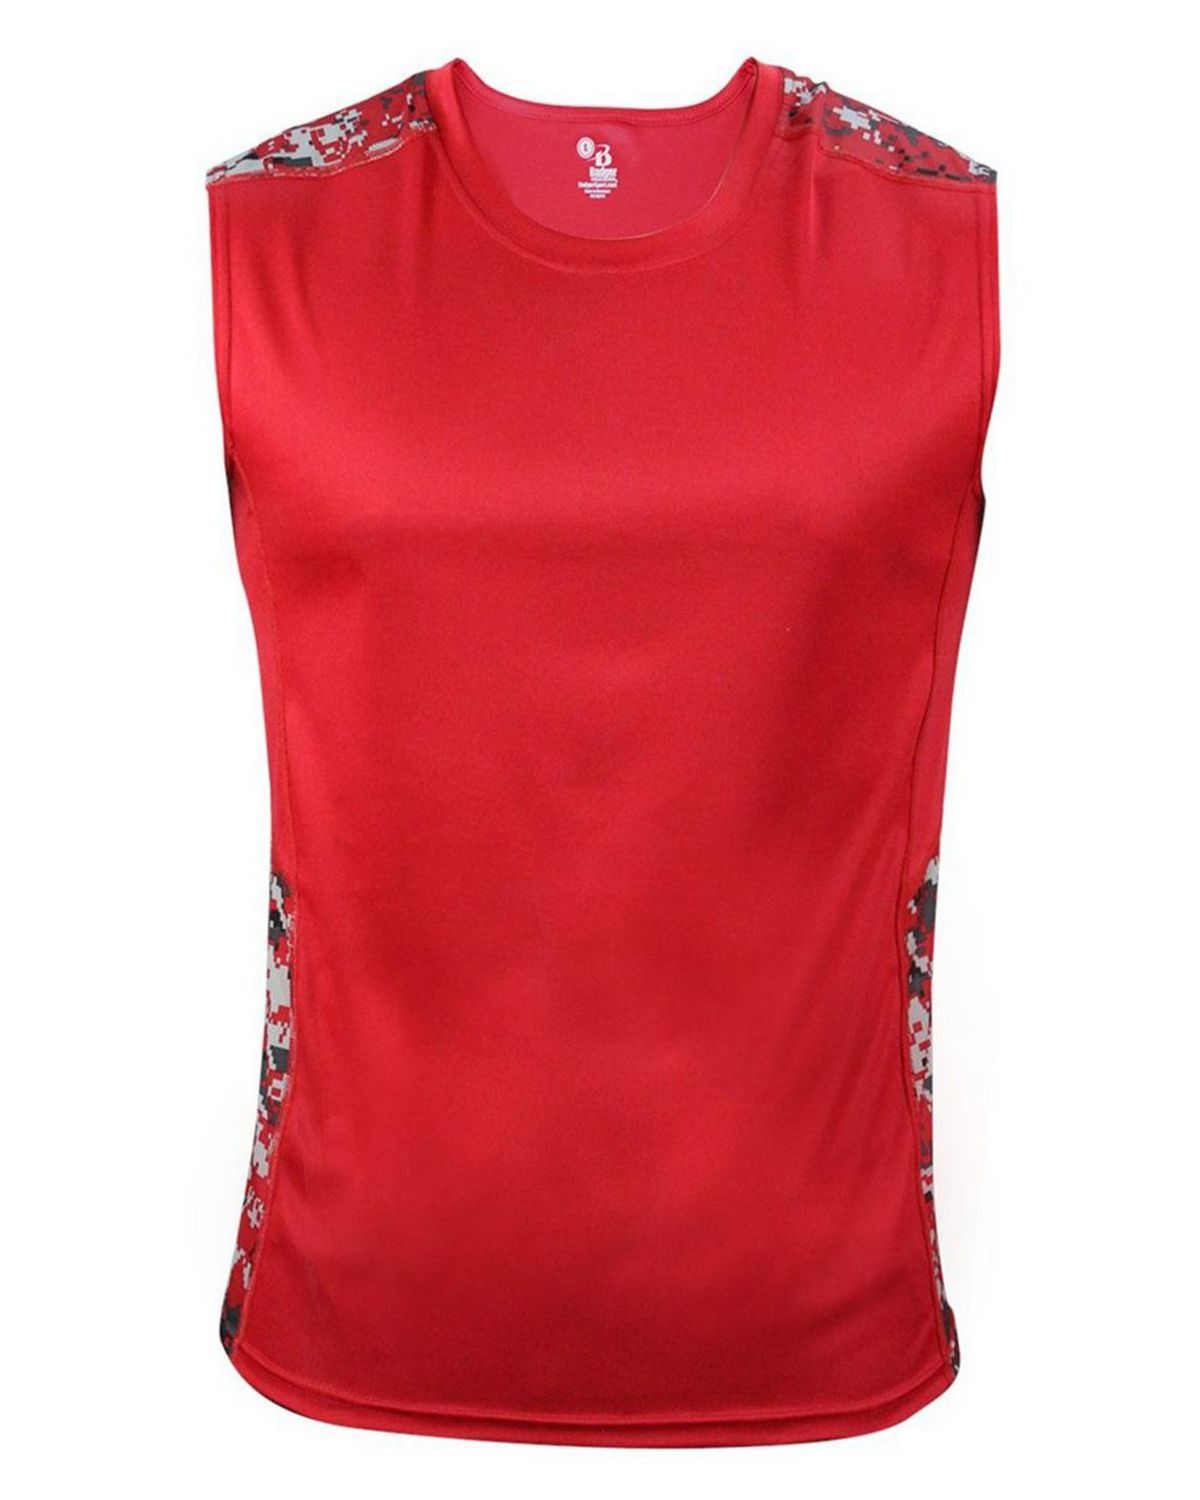 Badger 4532 Digital Camo Battle Sleeveless T-Shirt - Red/ Red - S #sleeveless